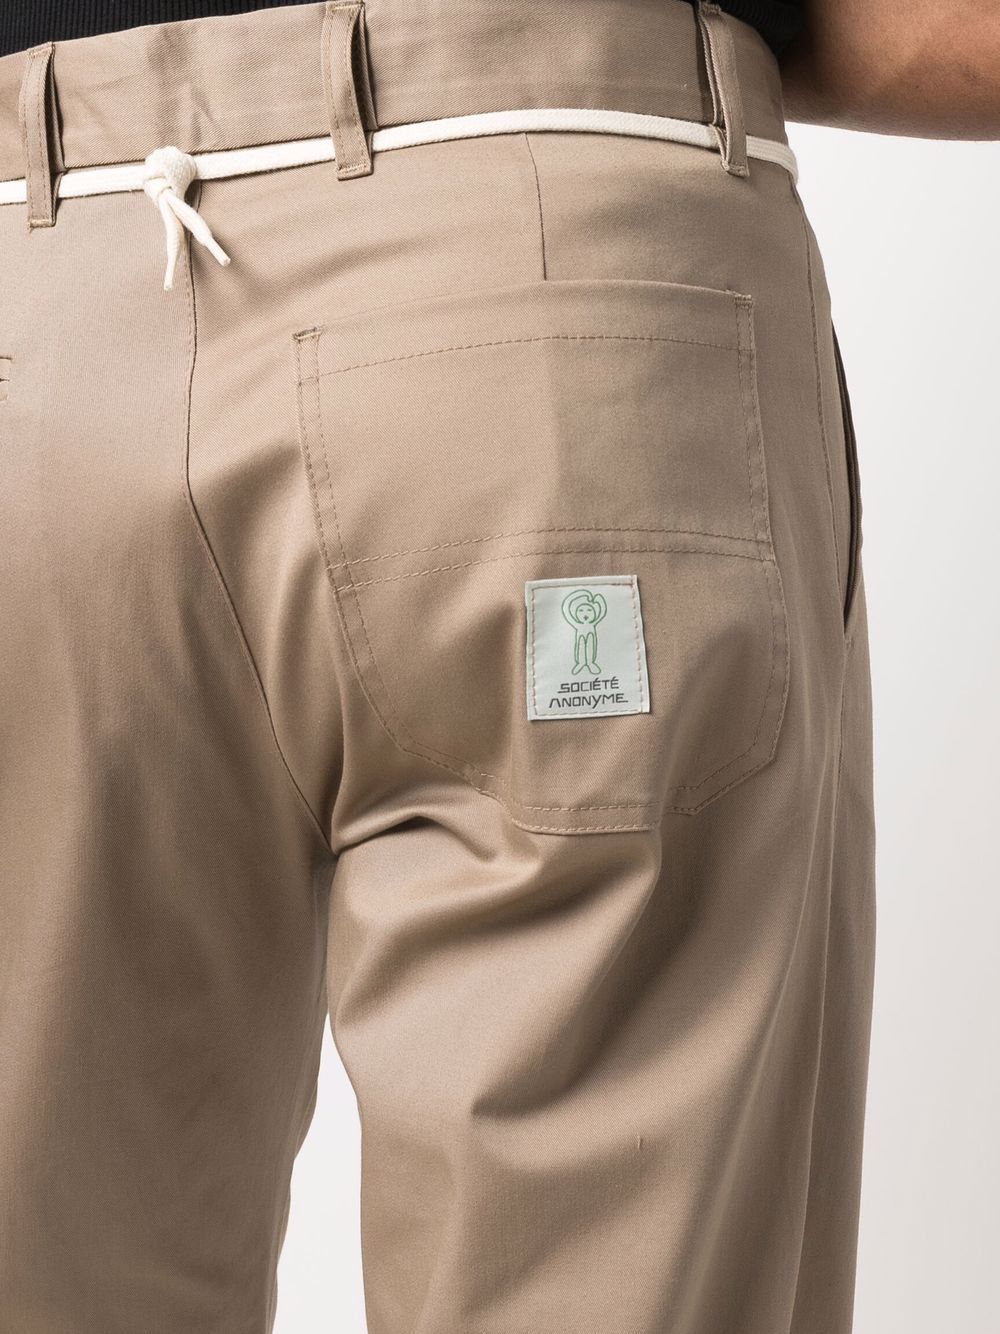 фото Société anonyme брюки с поясом на завязках